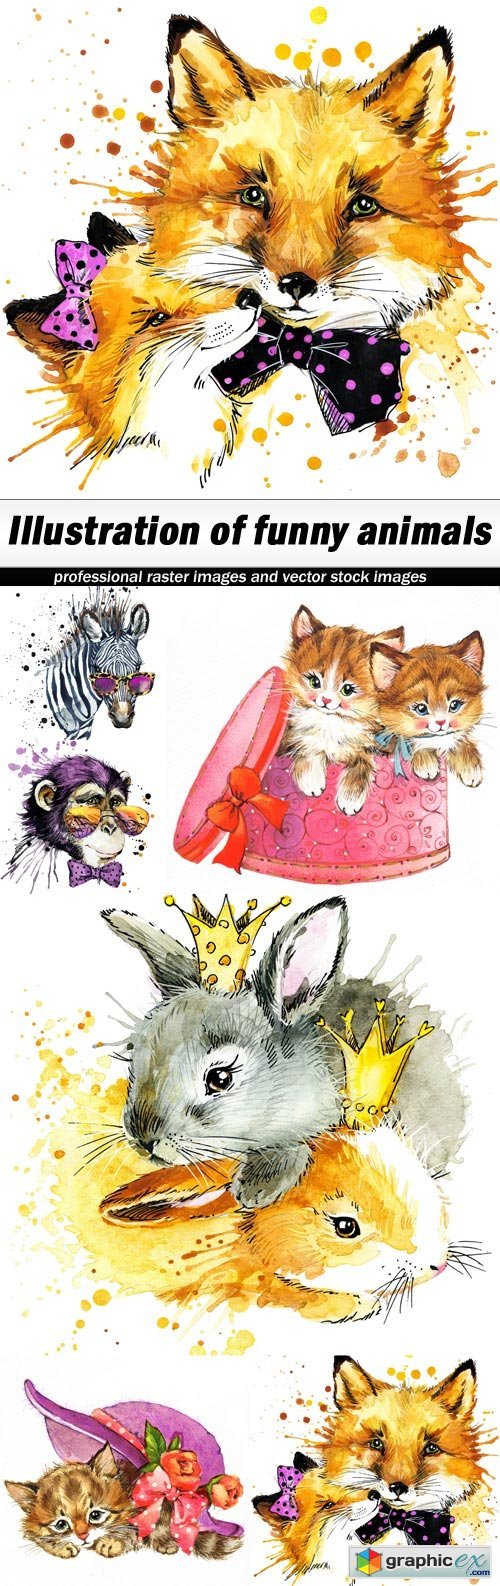 Illustration of funny animals